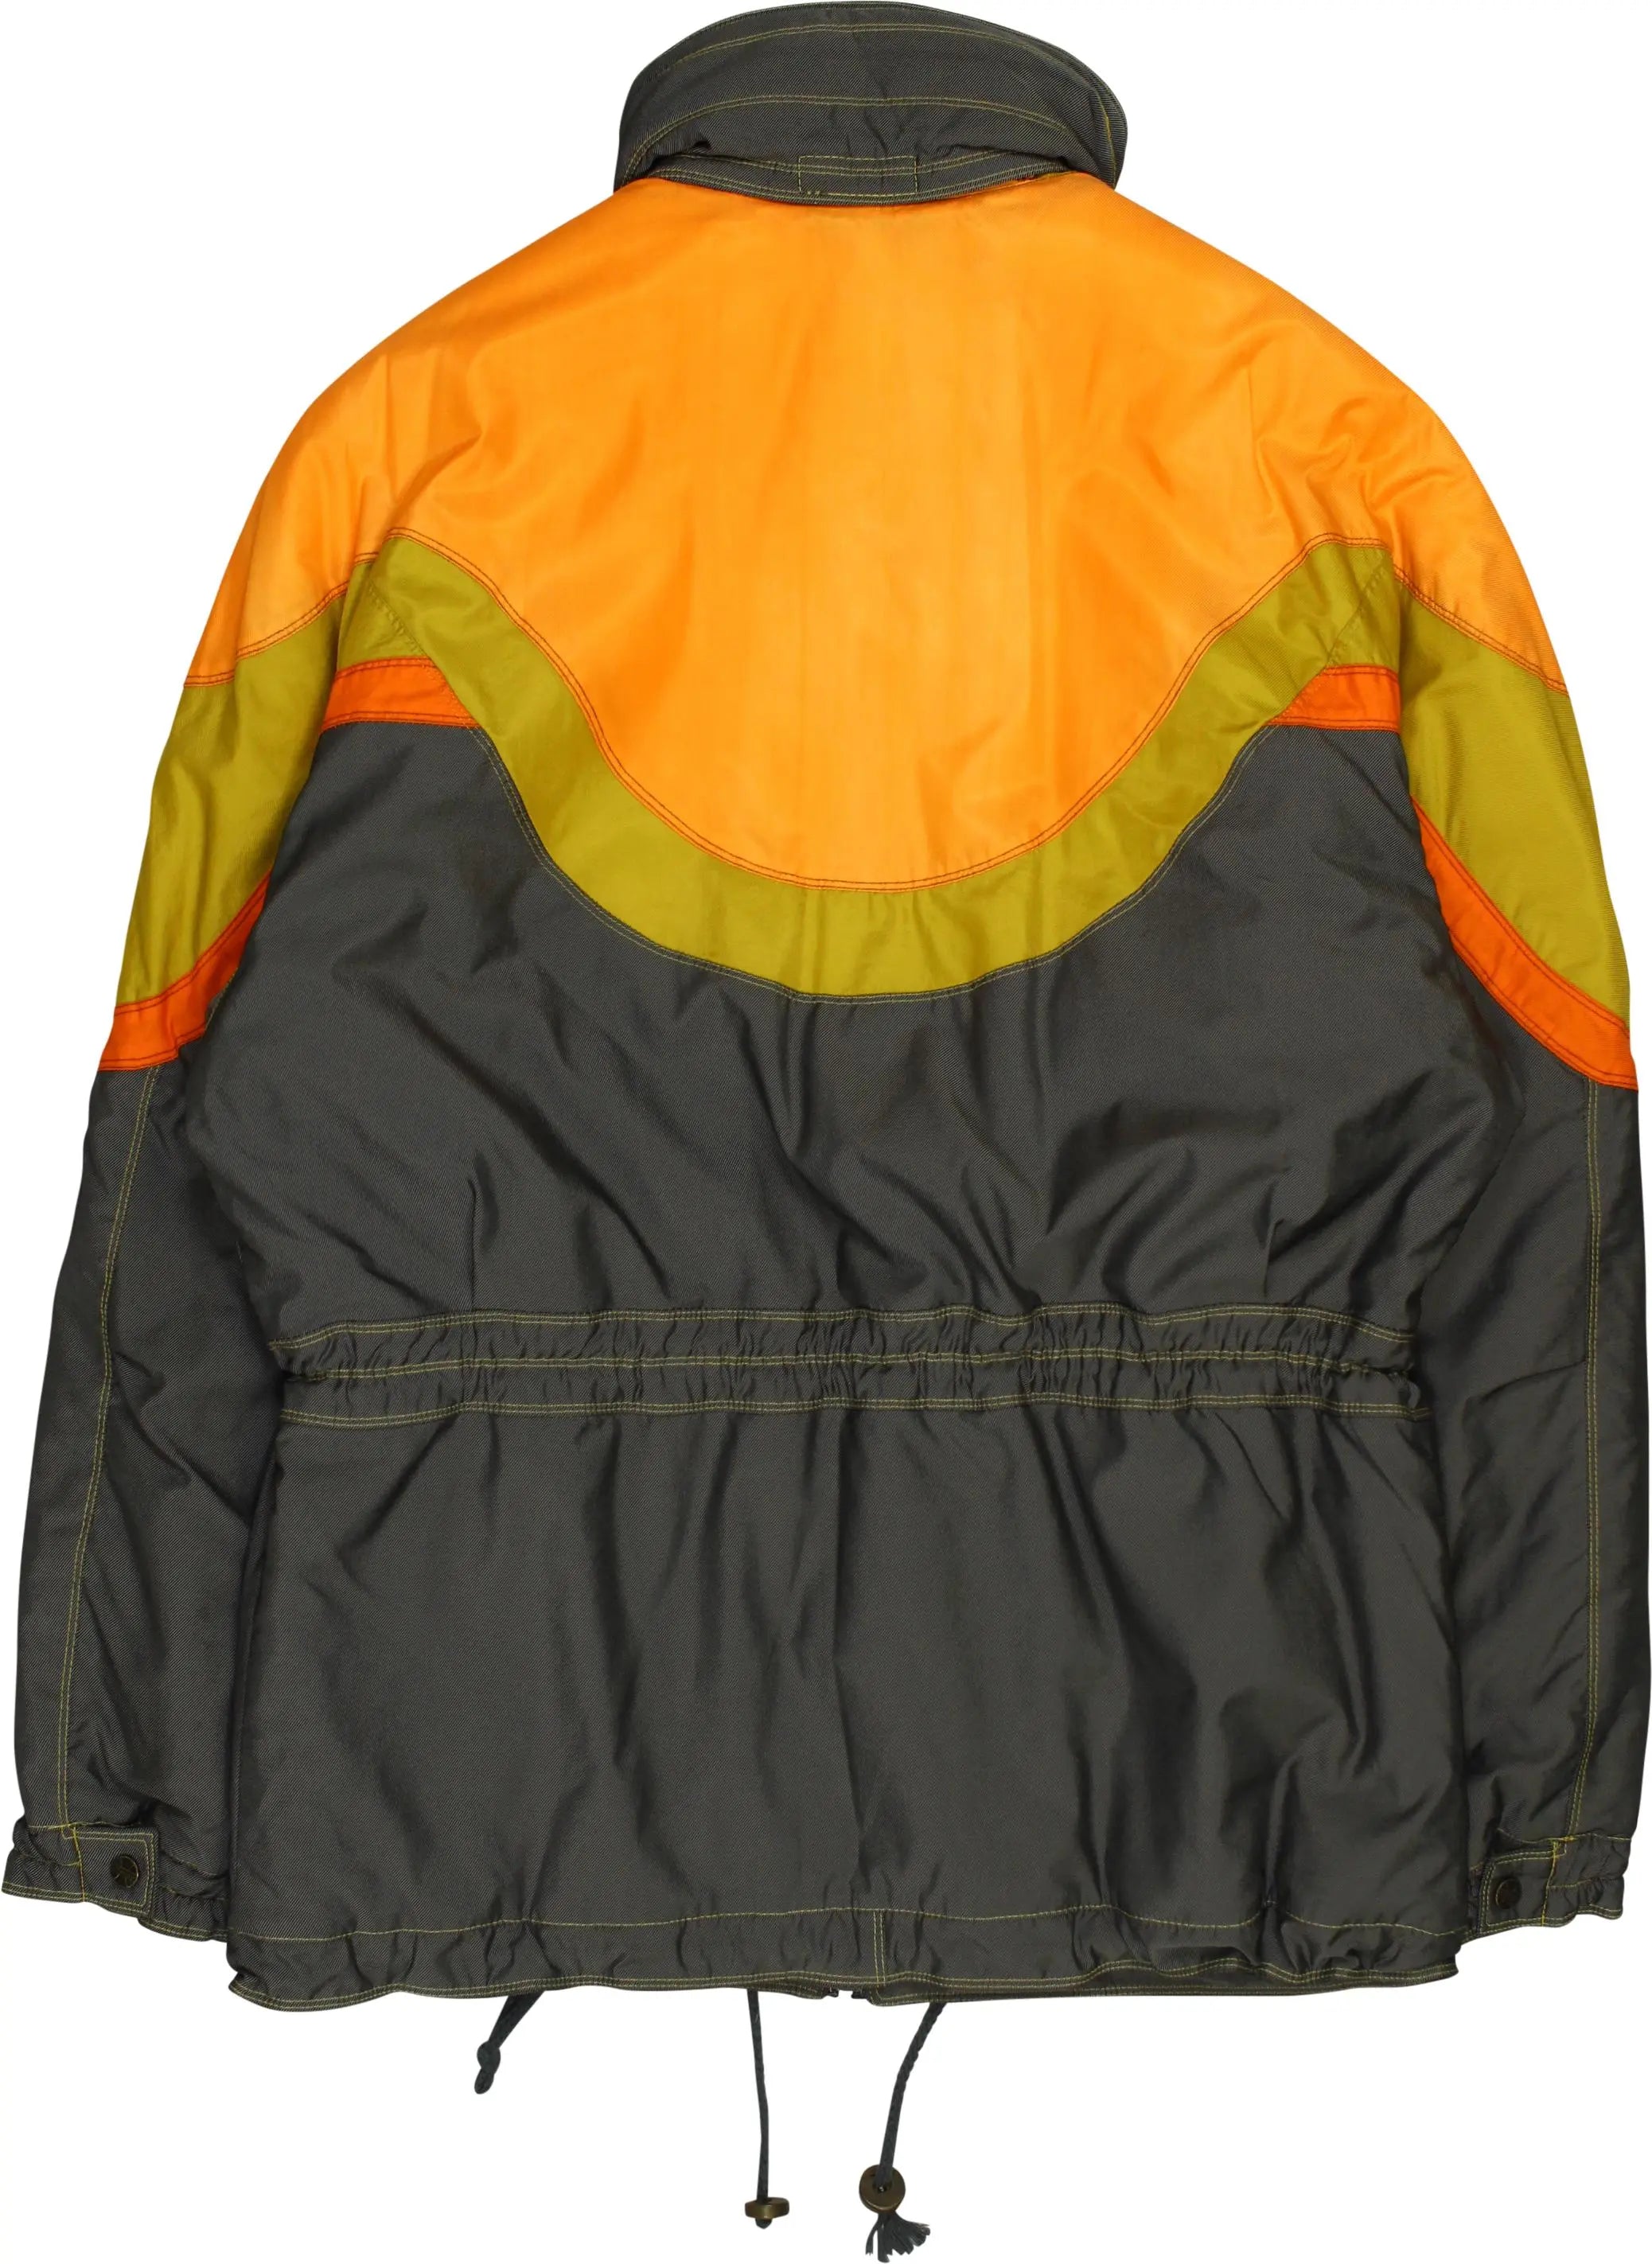 Ellesse - 90s Jacket by Ellesse- ThriftTale.com - Vintage and second handclothing